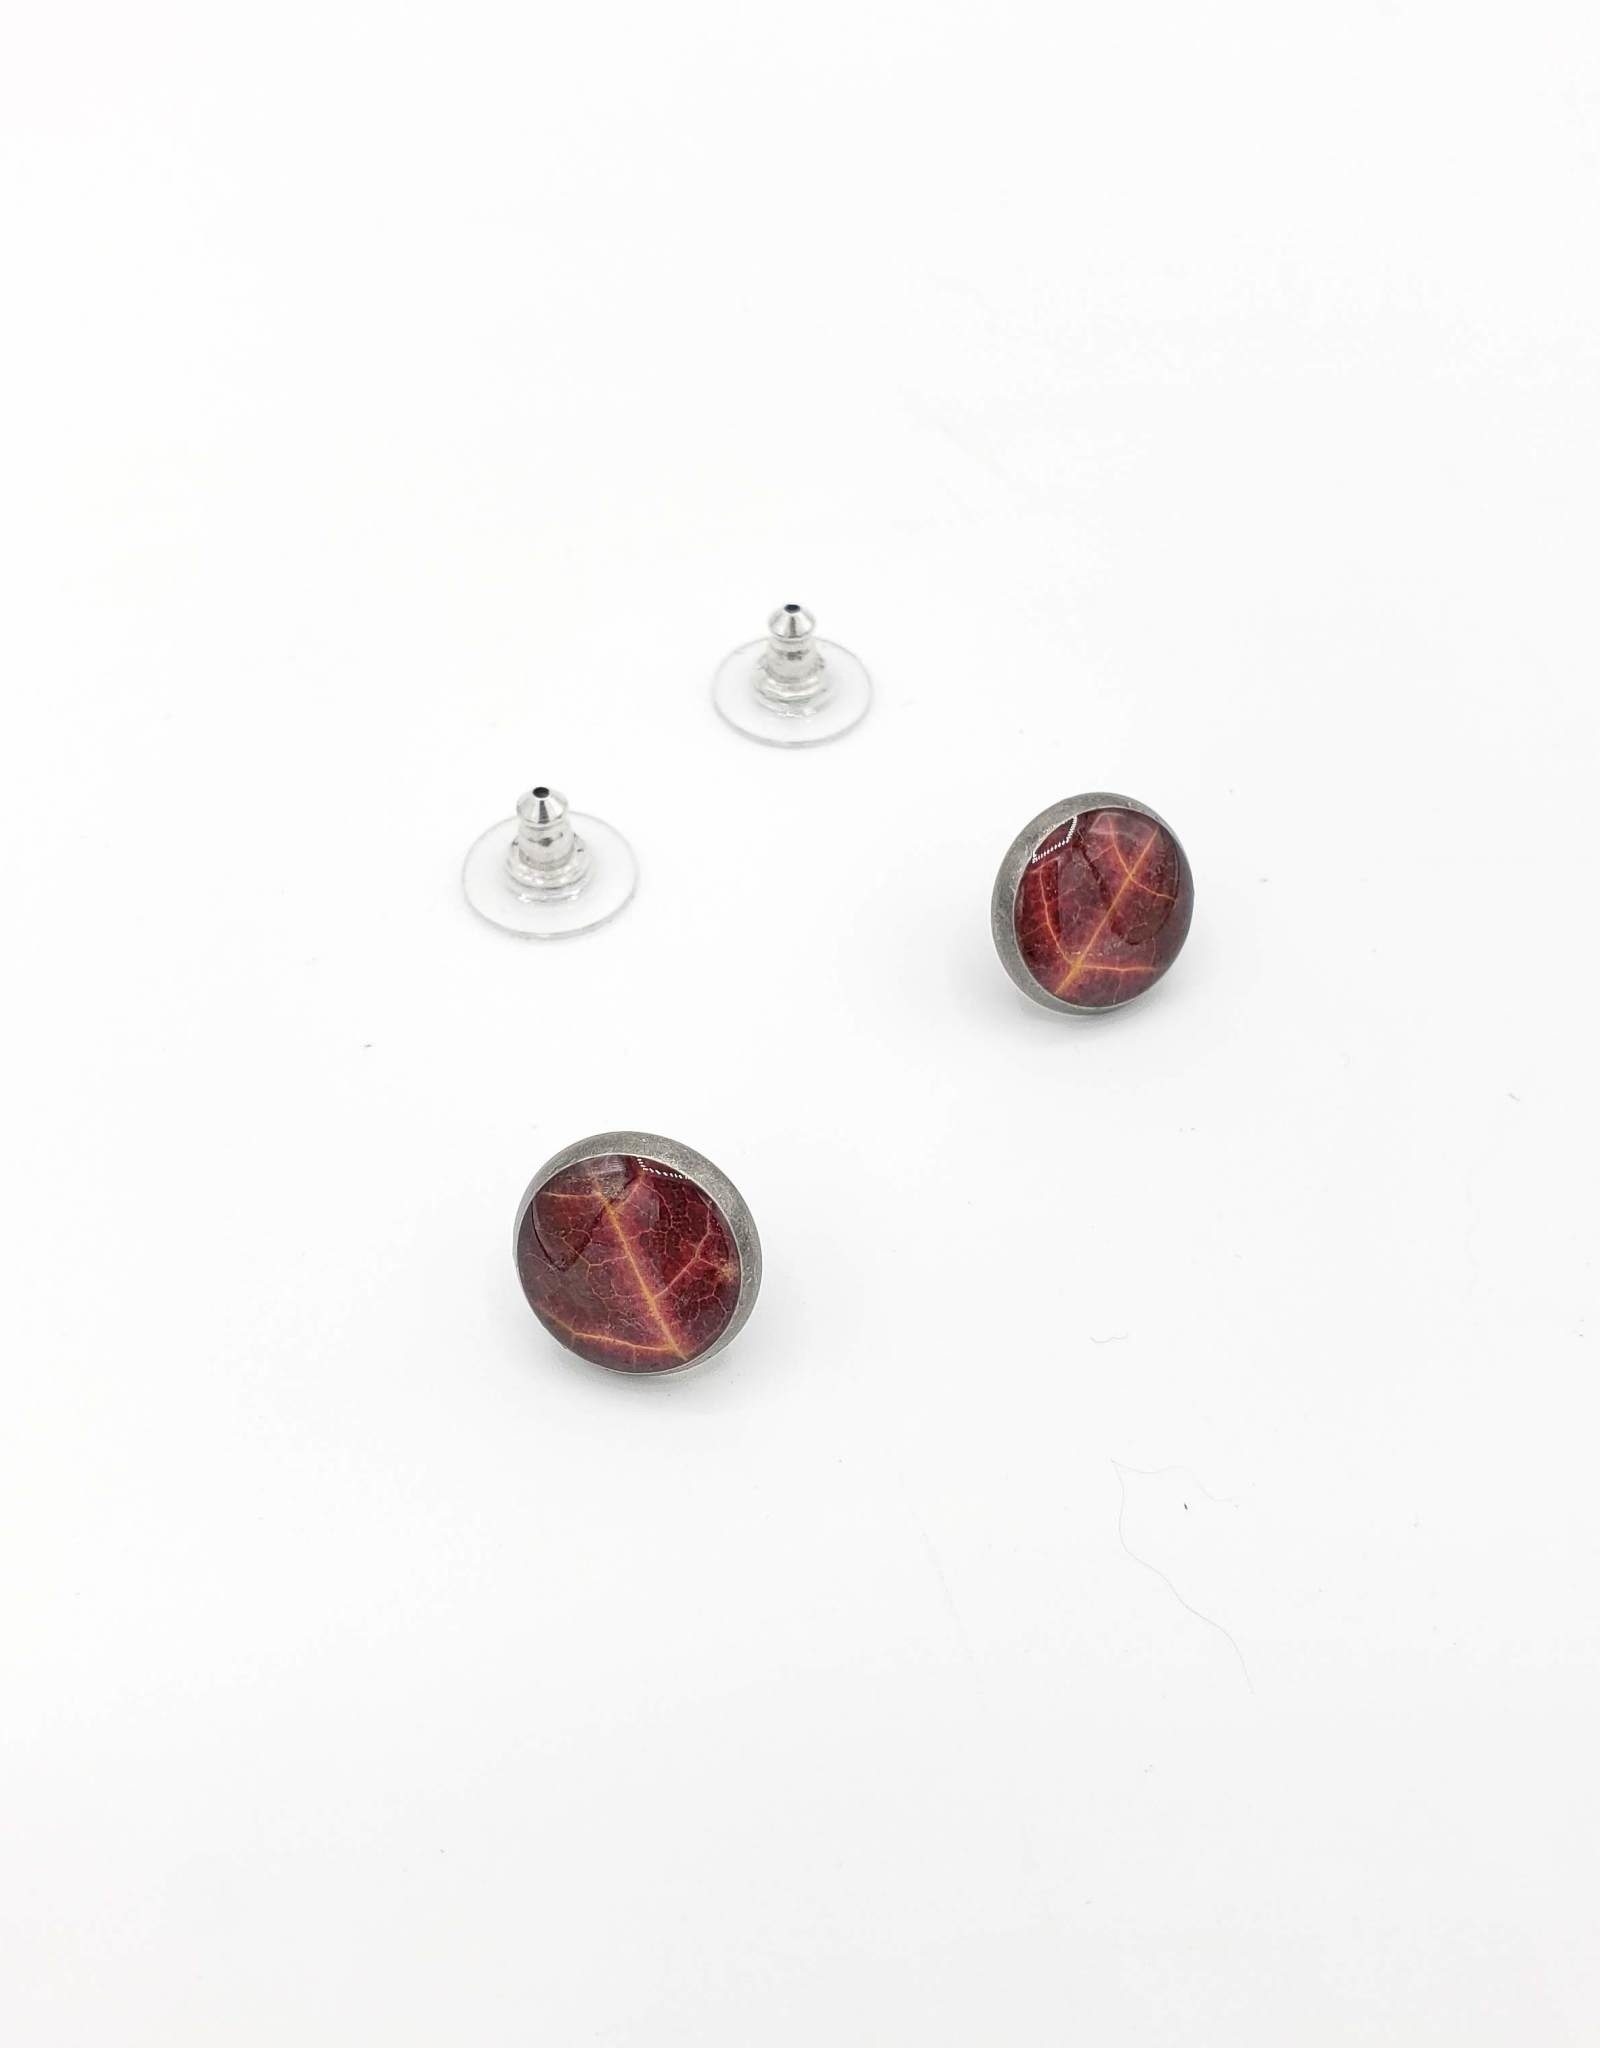 by Kali Red Leaf in Resin Post Earrings, Antiqued Silver - by Kali